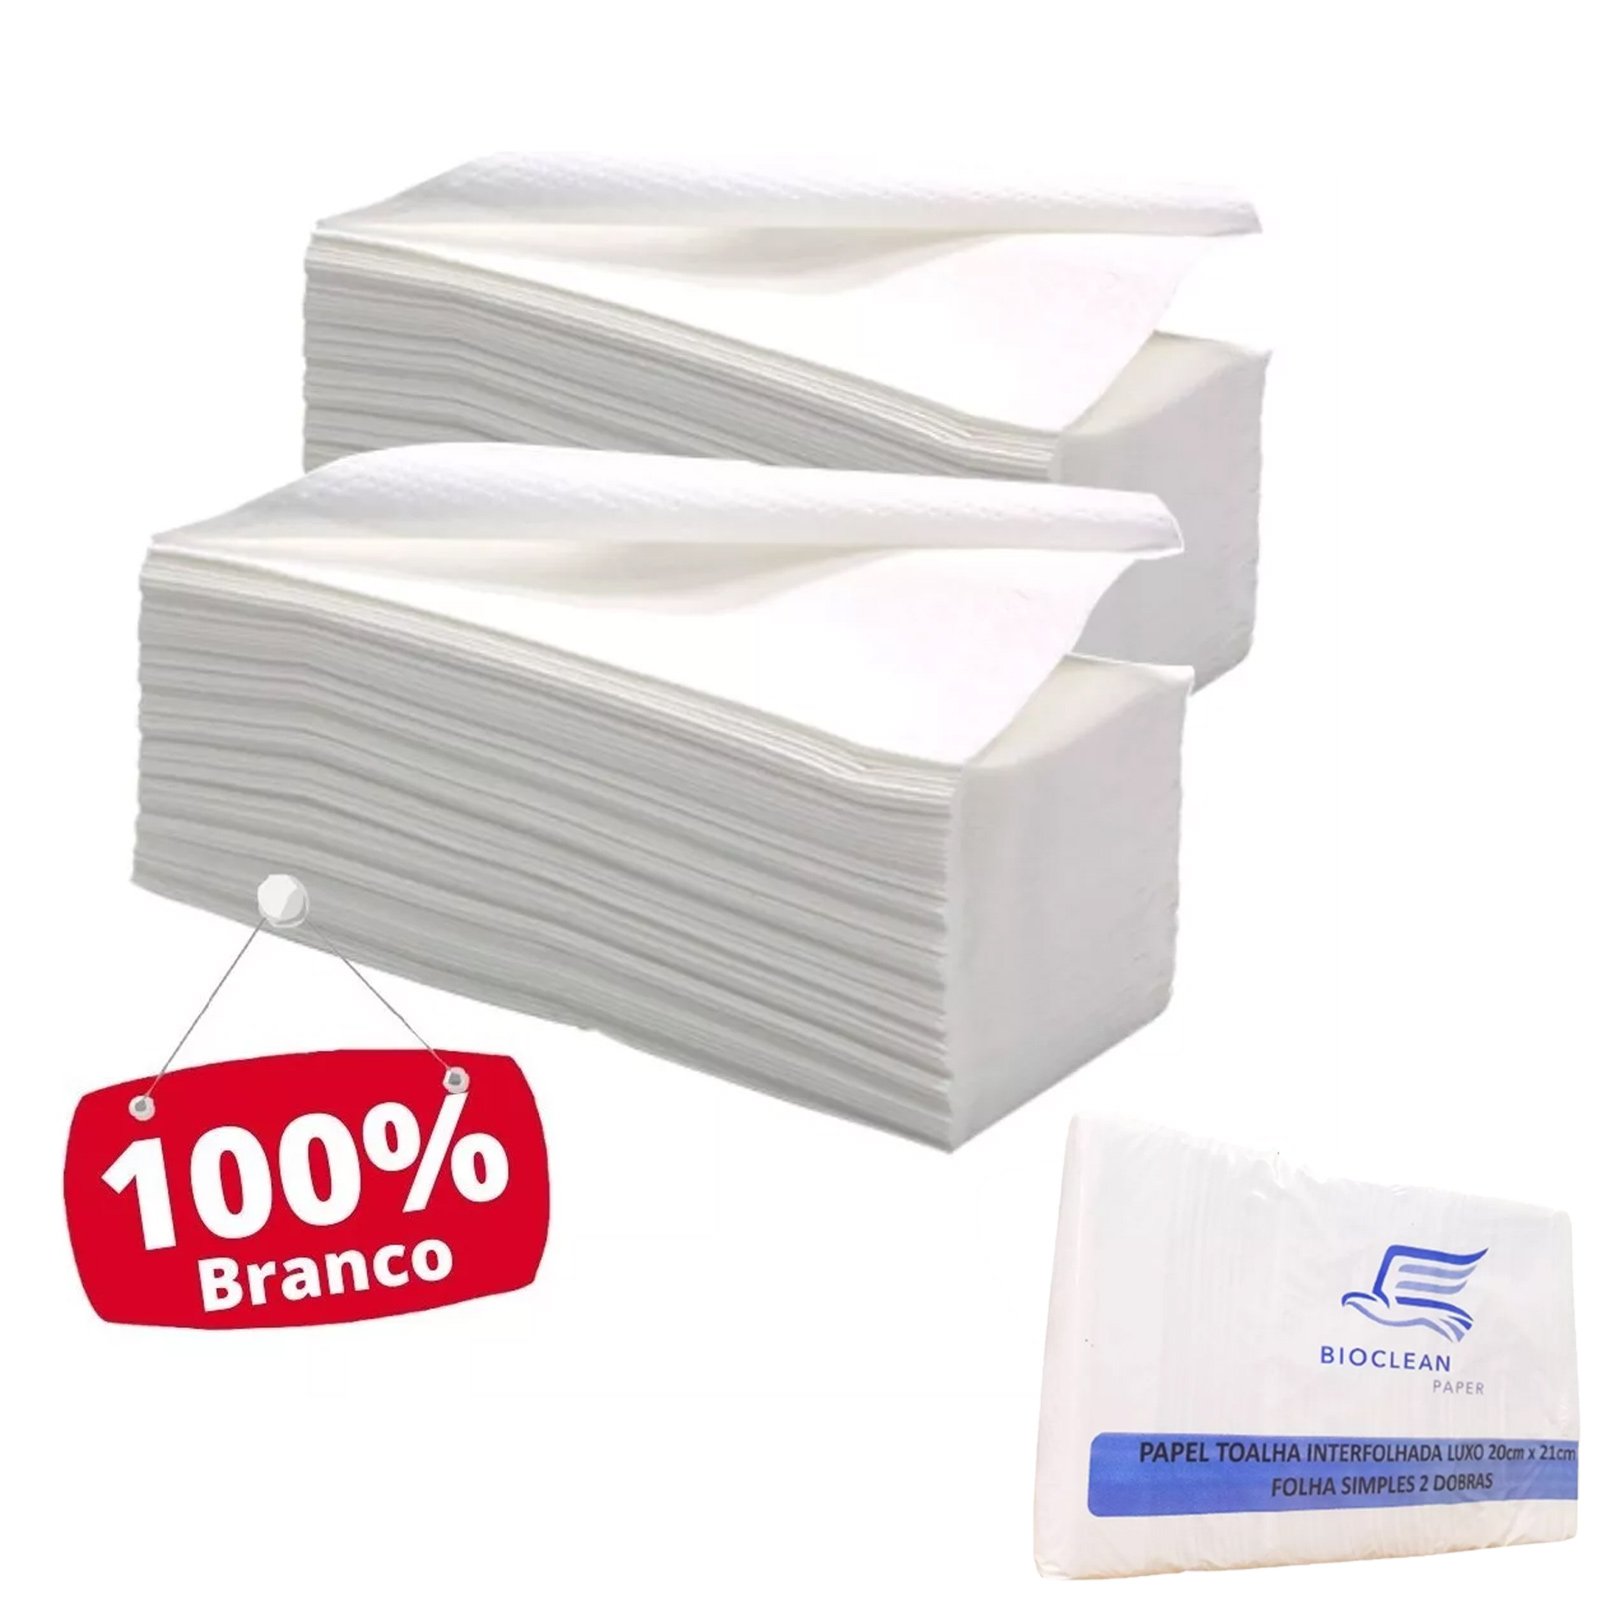 3 Pacotes Papel Toalha Interfolhado 20 X 21 Cm 1000 Folhas Bioclean Paper Luxo Branco - Kit 3000 Toa - 2